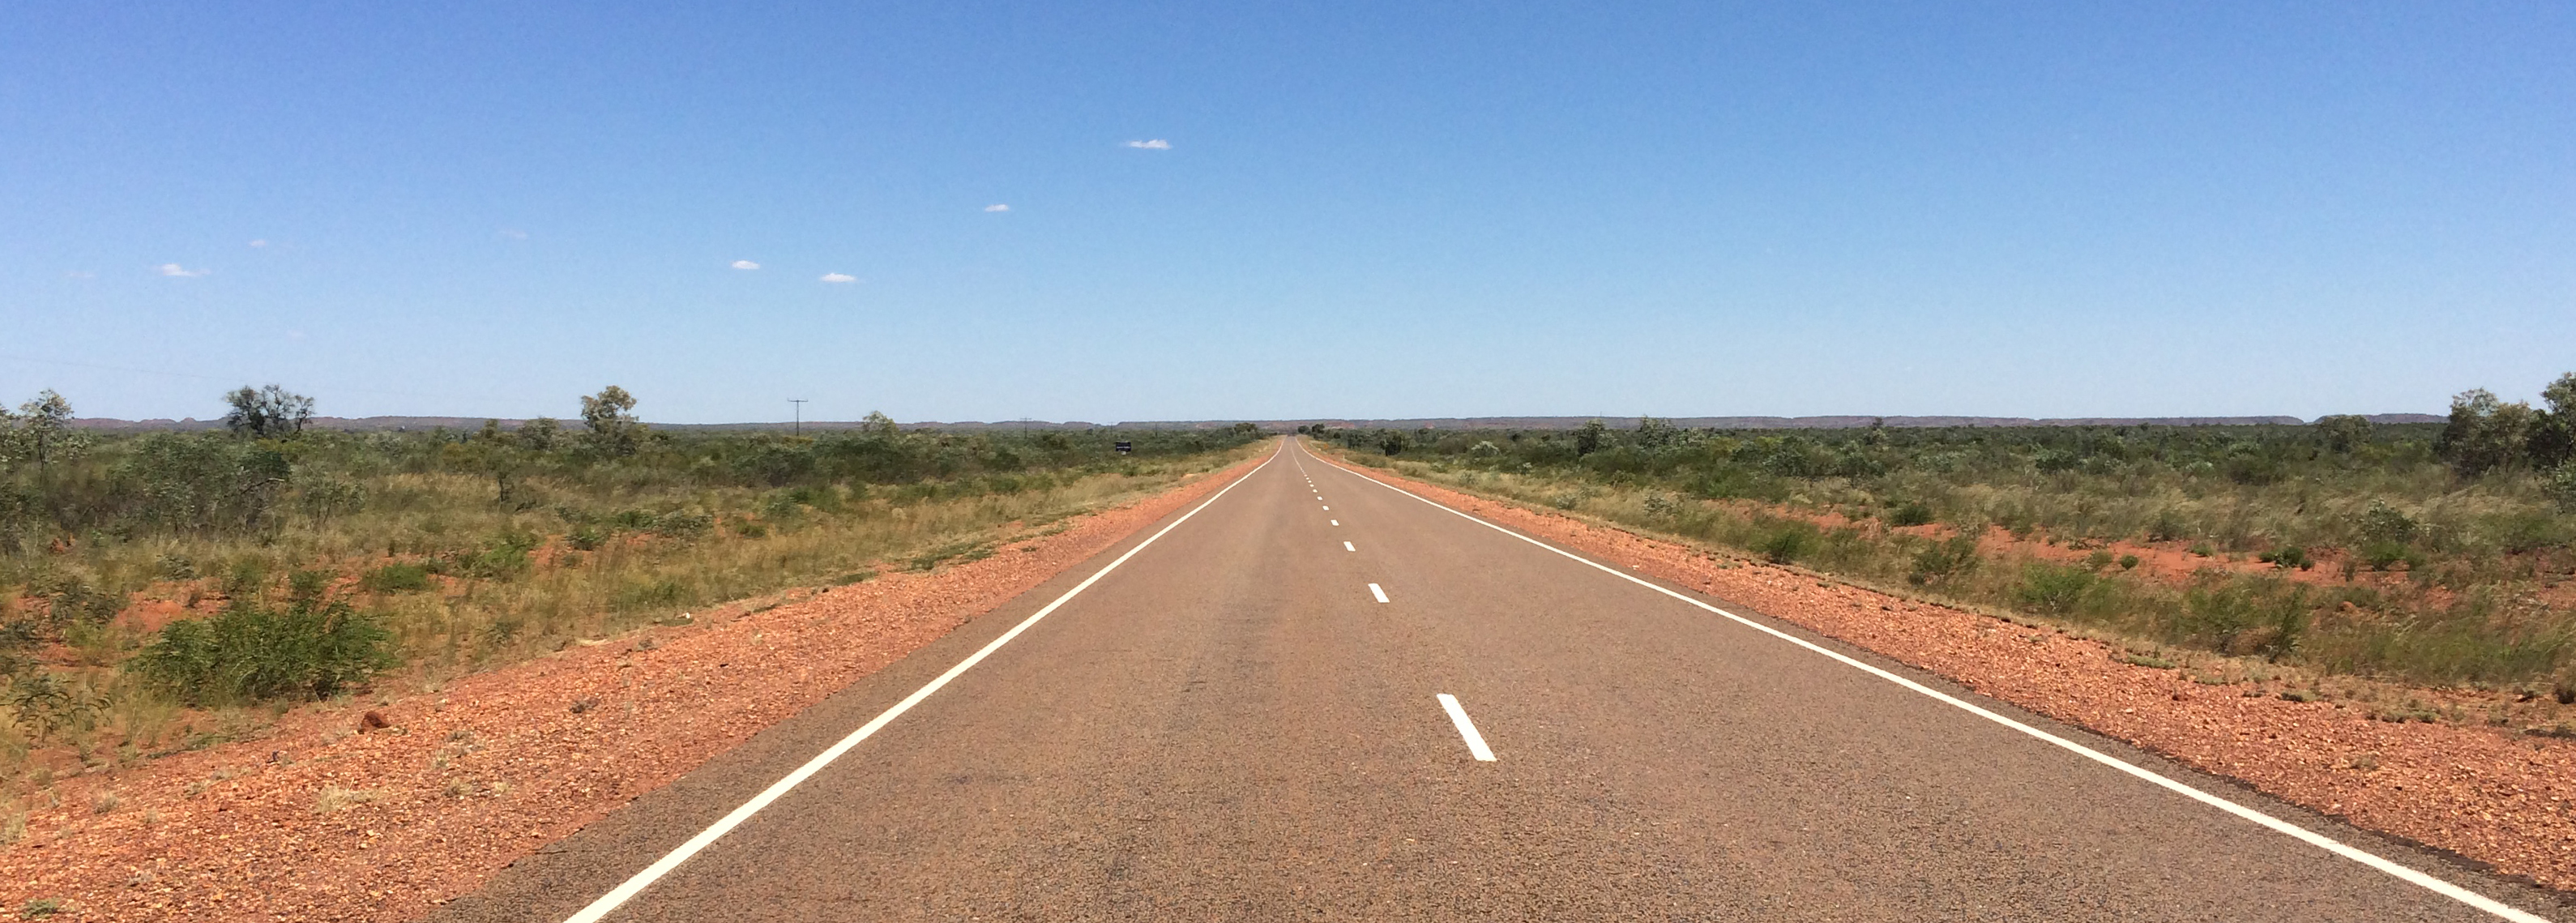 Stuart Highway, part 1